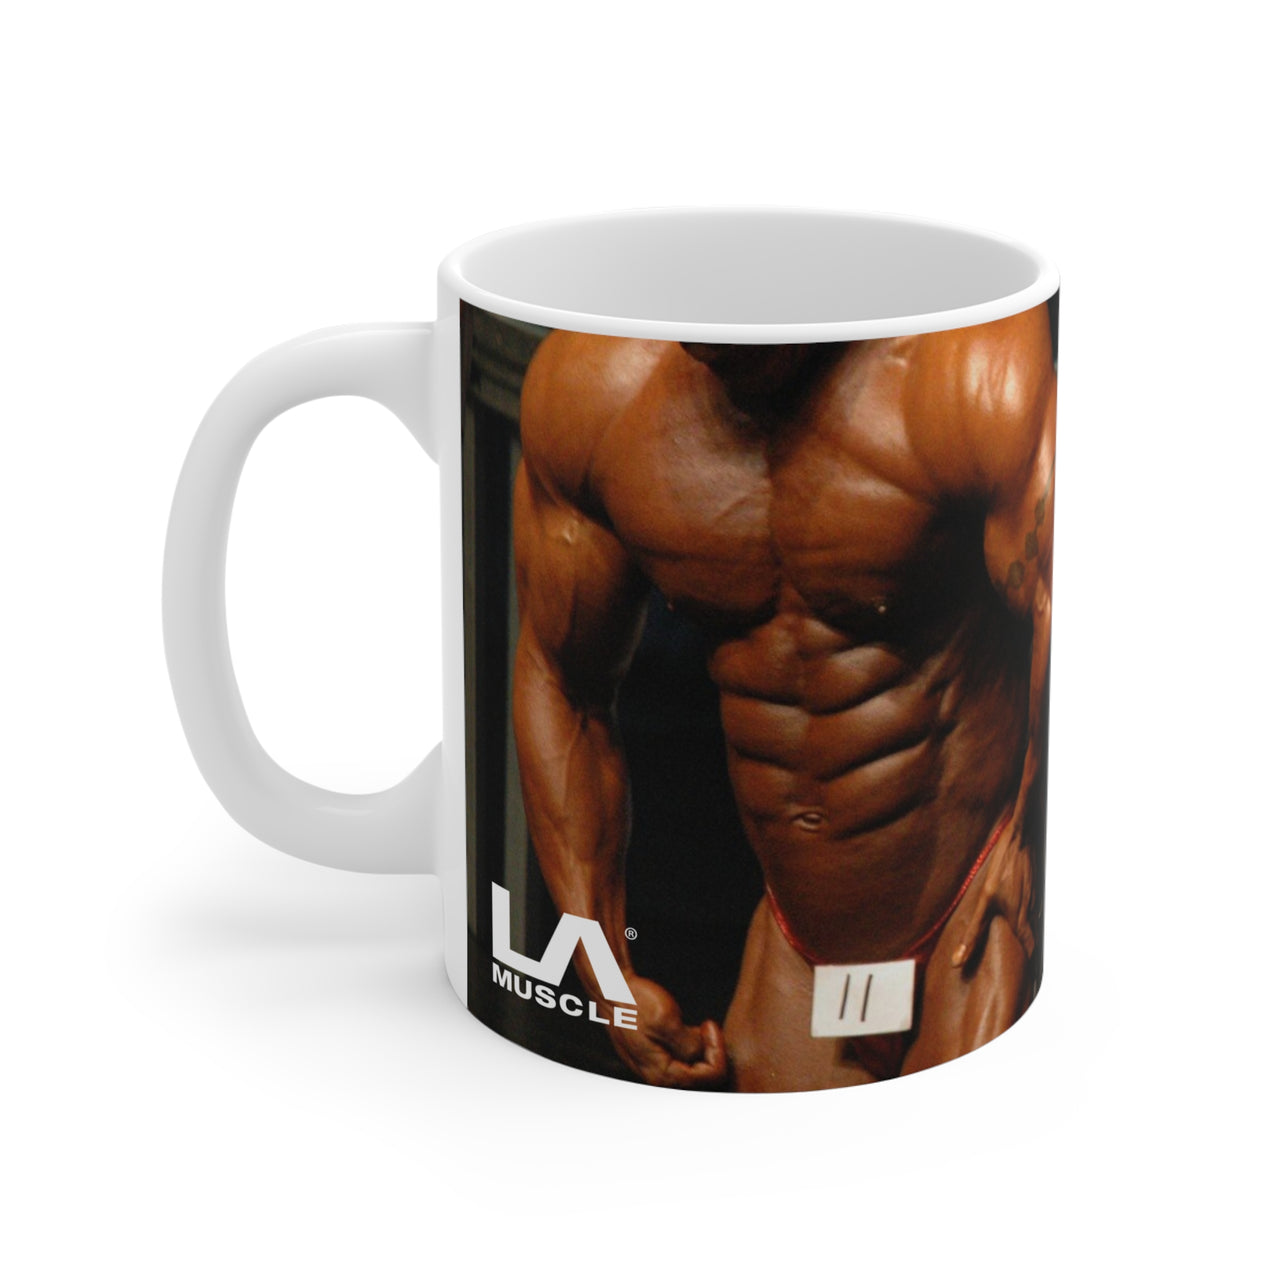 BIG BOYS by LA Muscle Mug 11oz